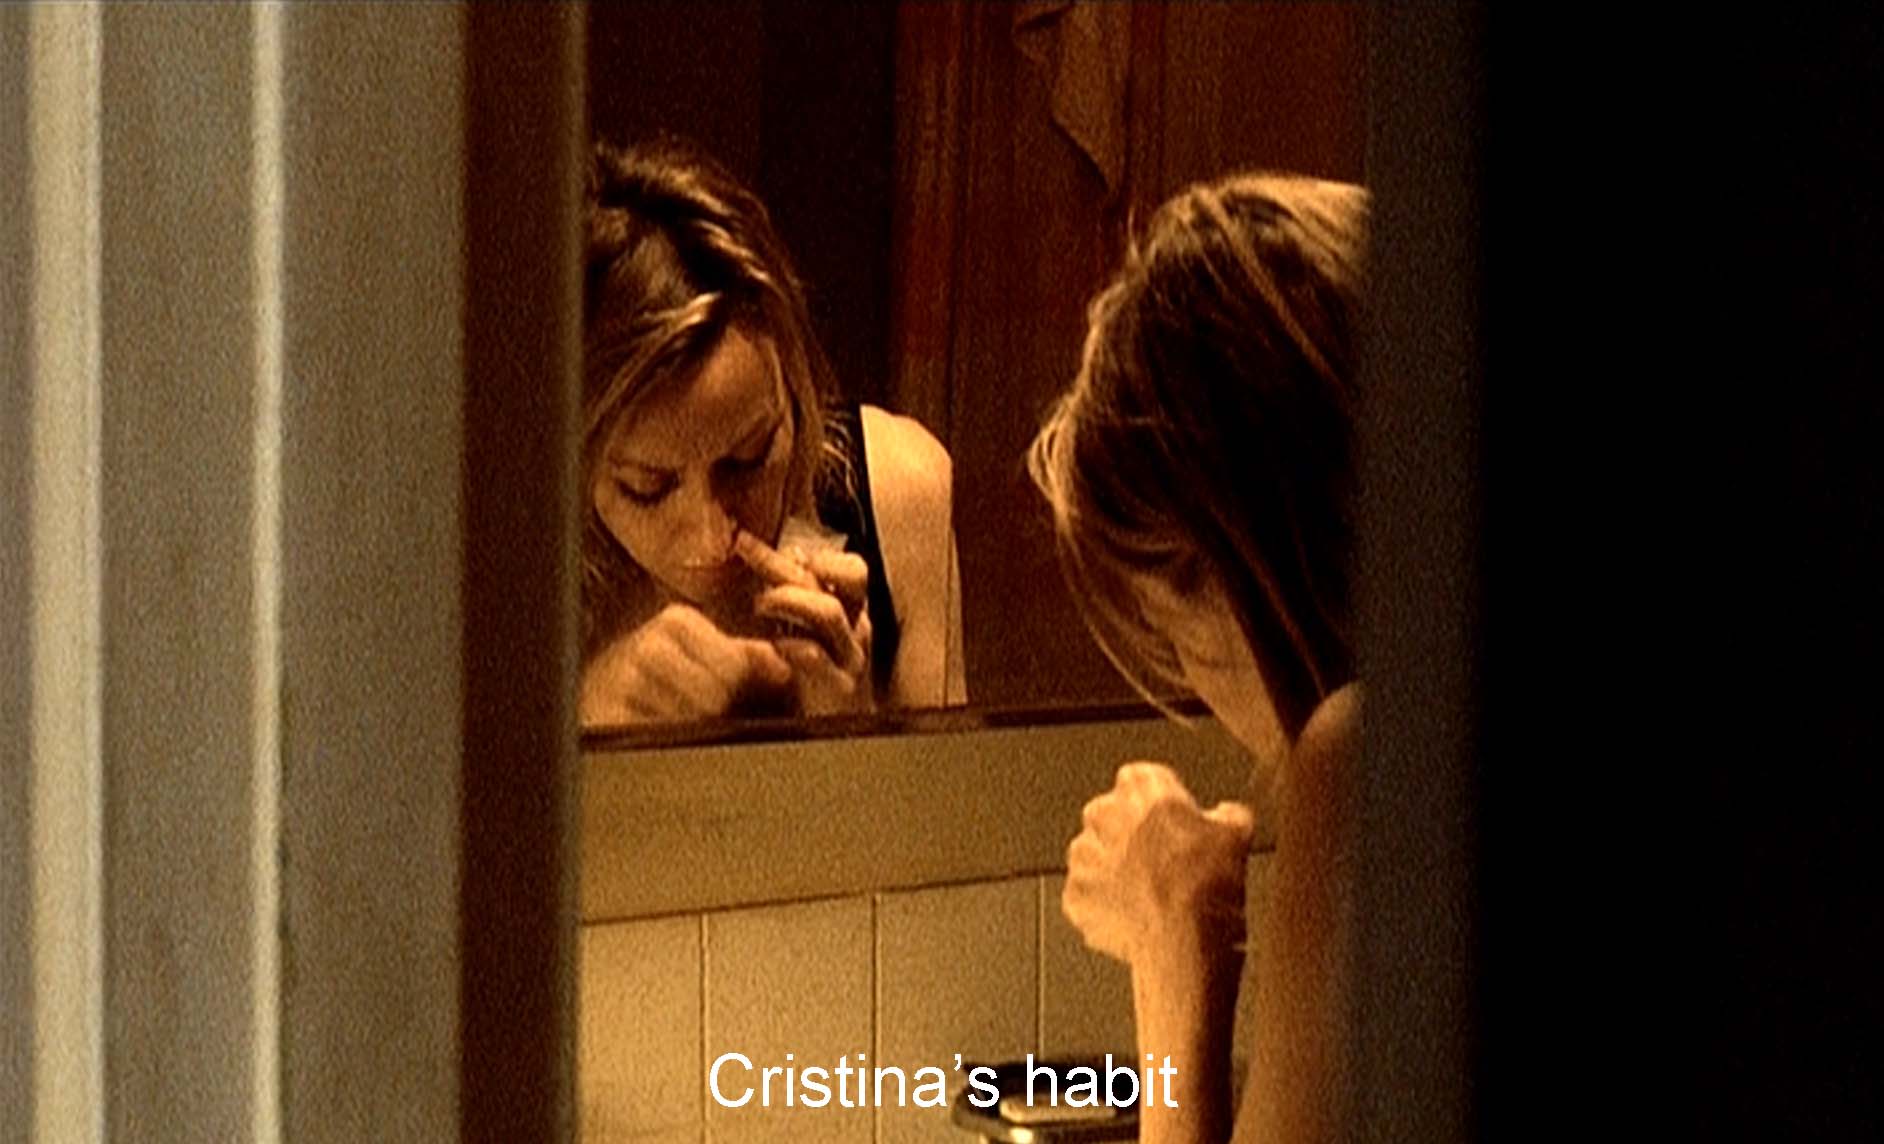 Cristina's habit